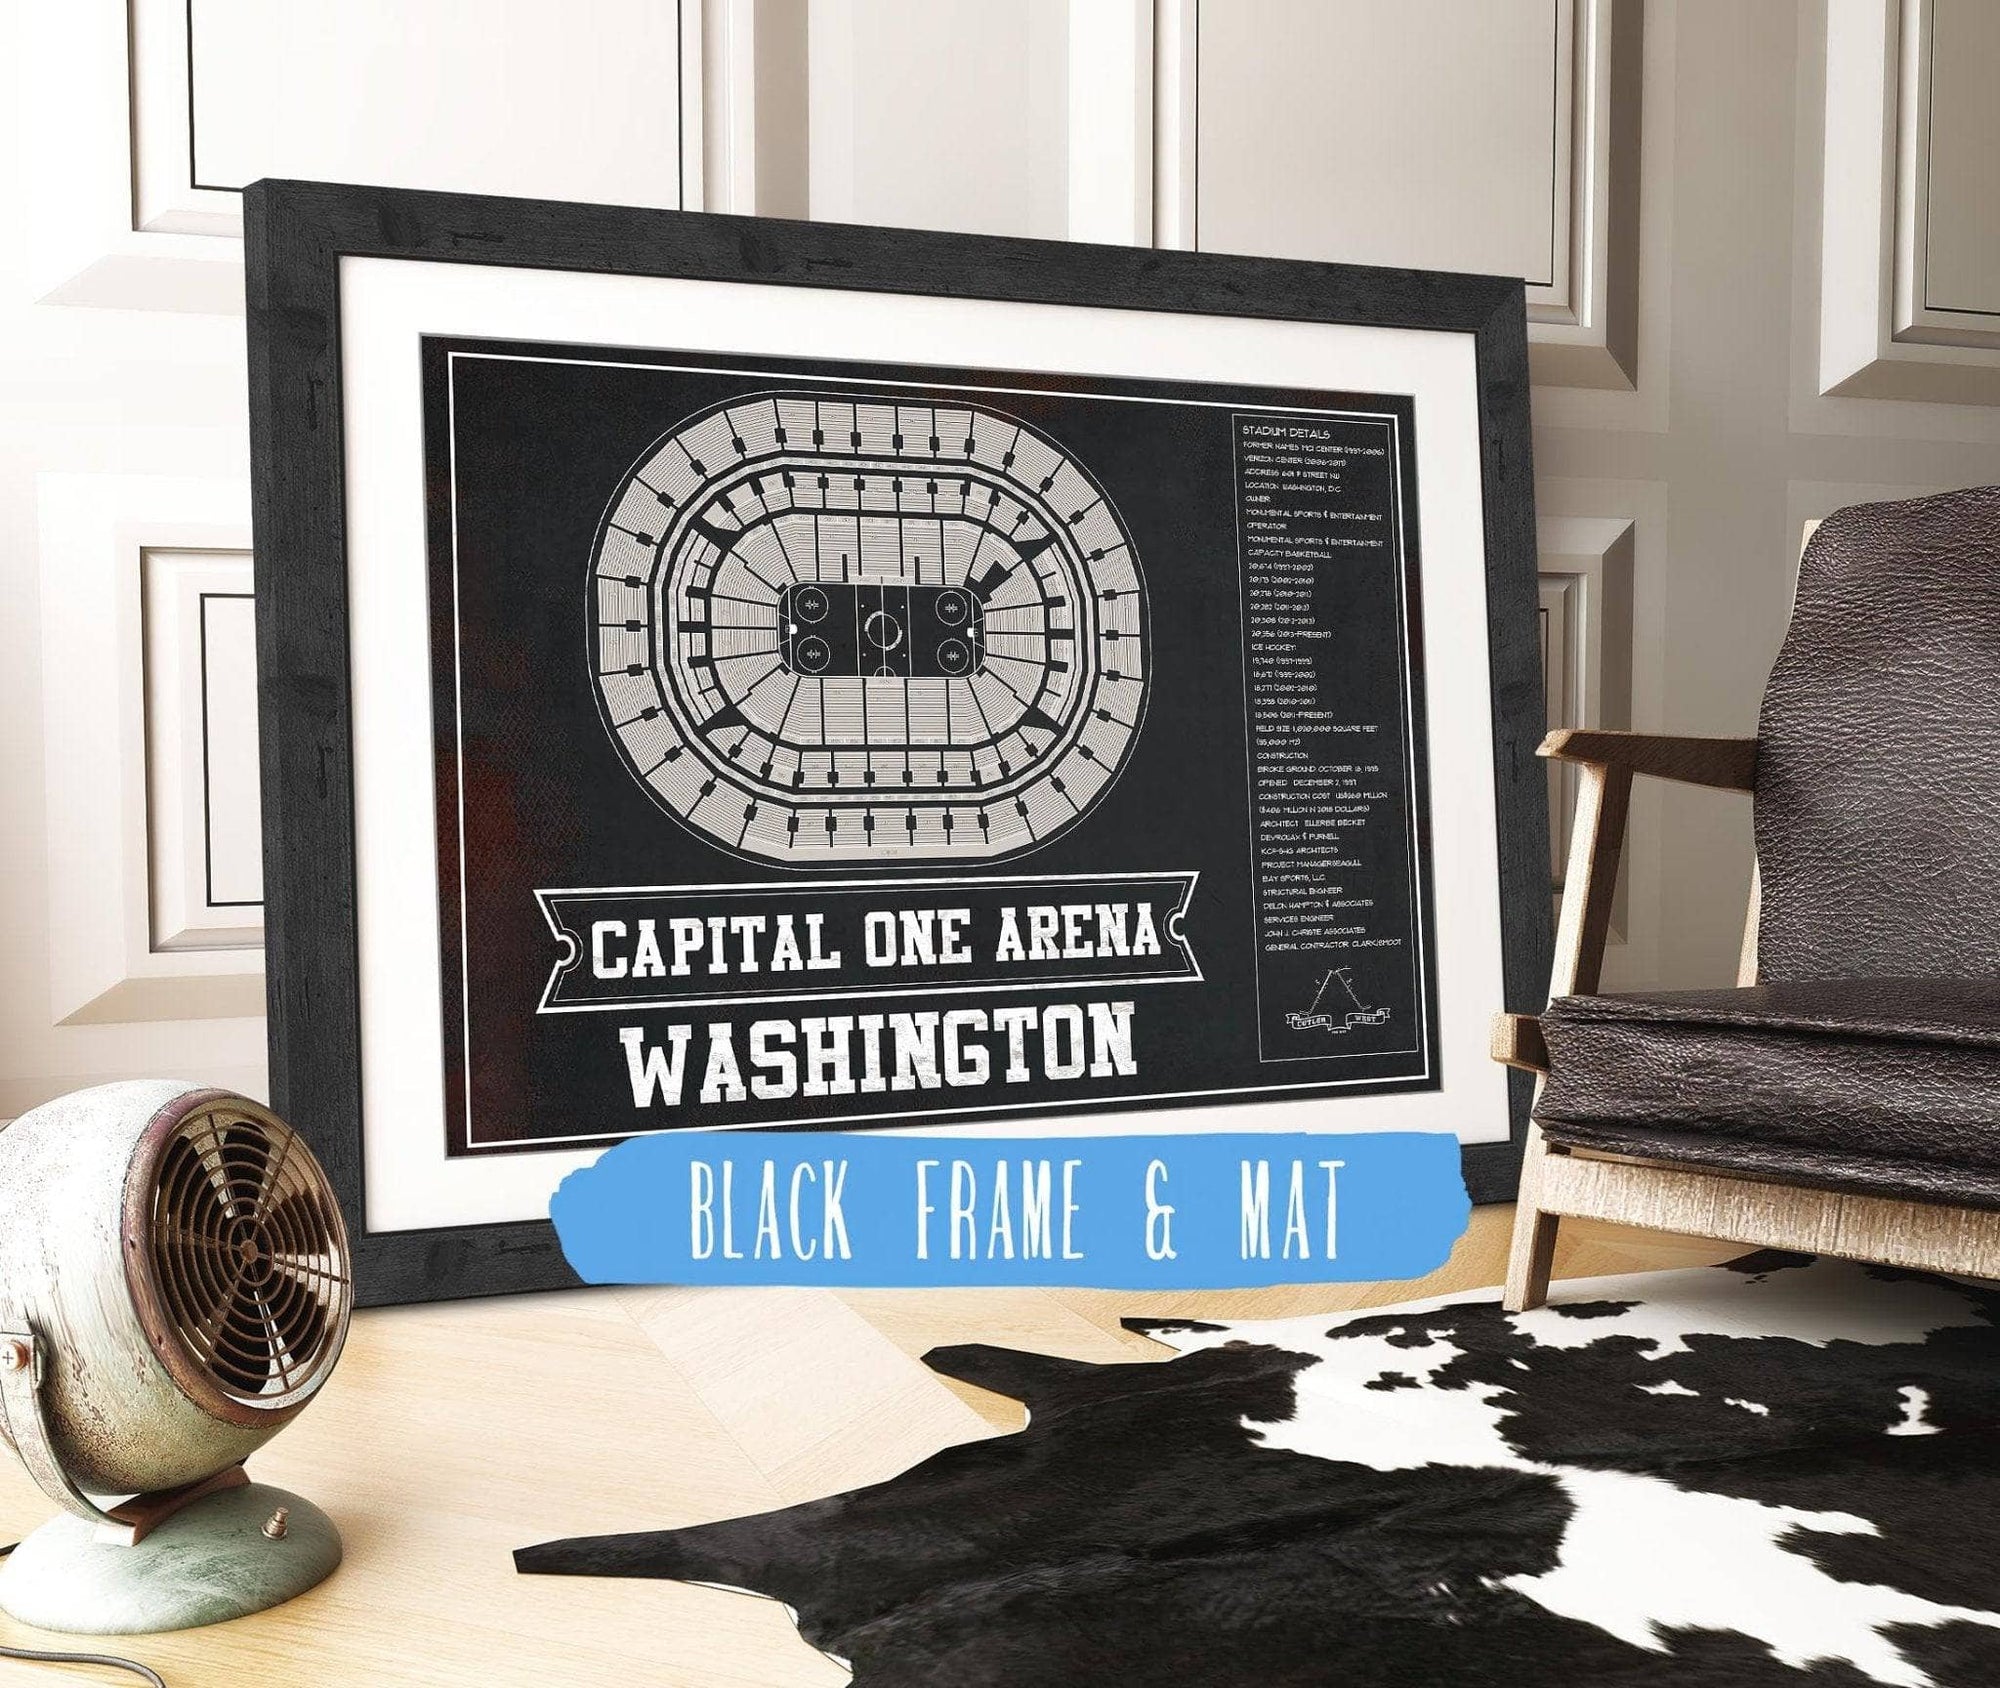 Cutler West 14" x 11" / Black Frame & Mat Washington Capitals Team color - Capital One Arena Seating Chart Vintage Art Print 673825643-TEAM-14"-x-11"81778